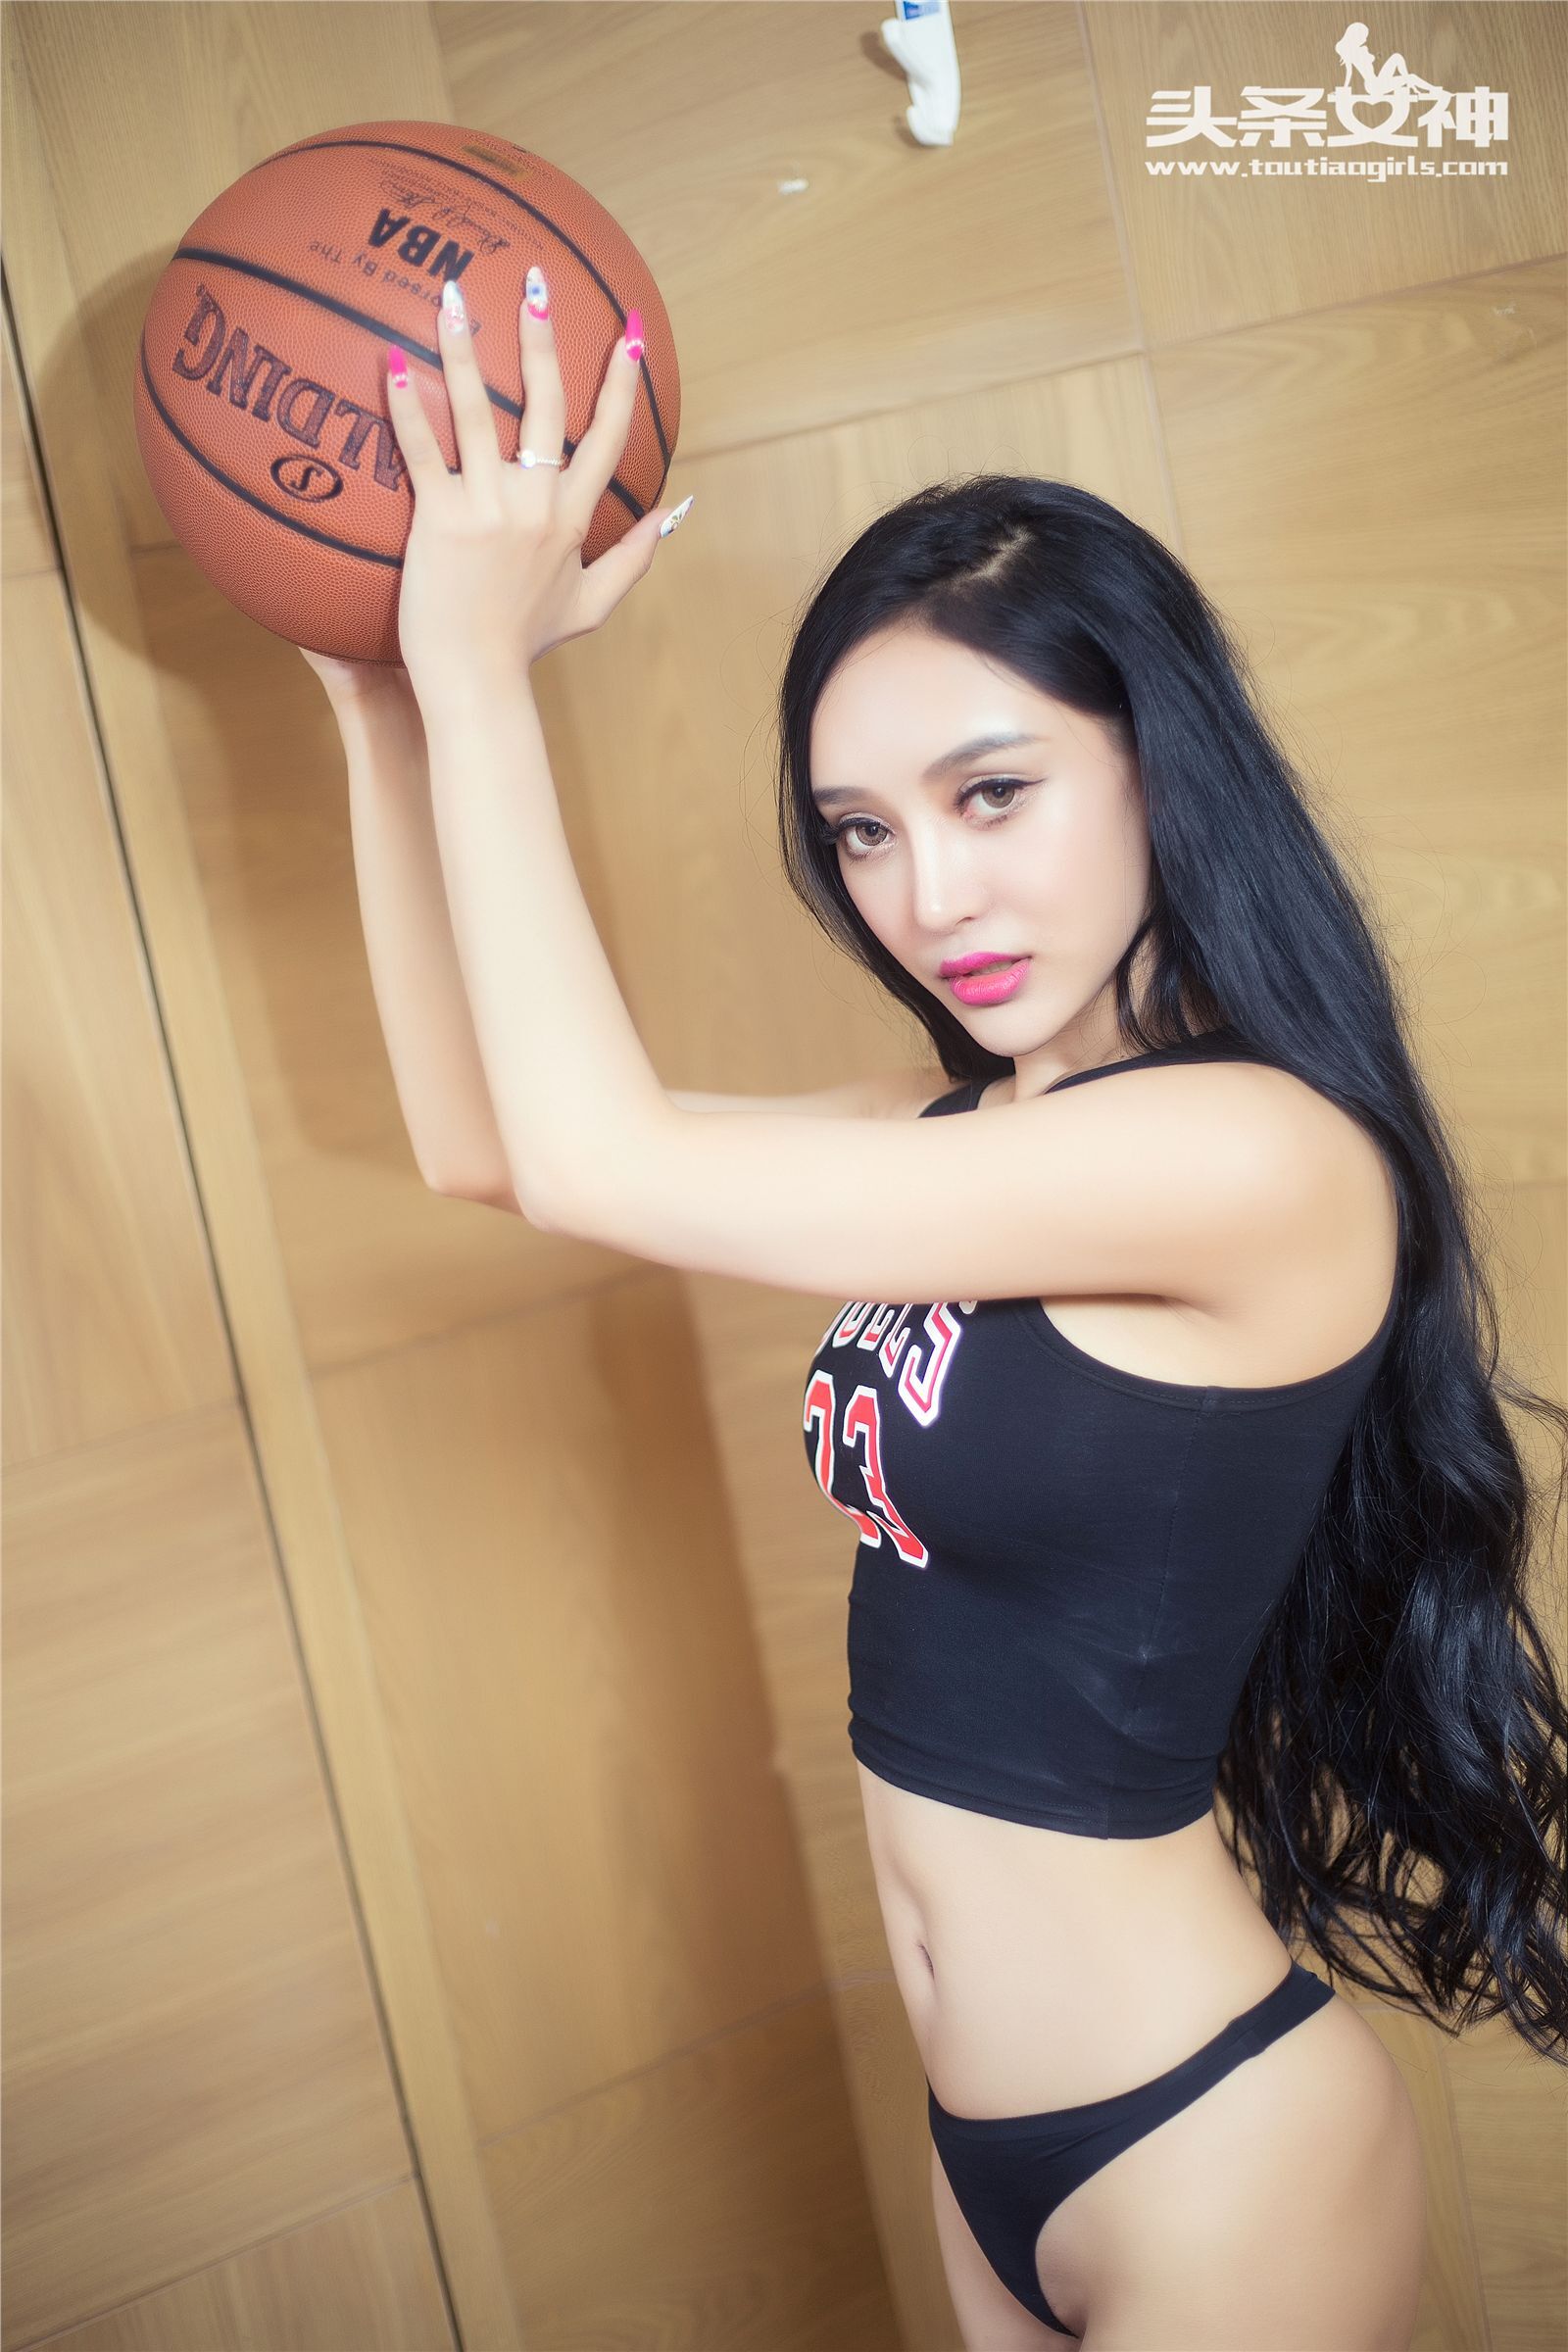 [Toutiao girls headline goddess] 2016-08-18 basketball baby sexy tribute to Jordan Rococo